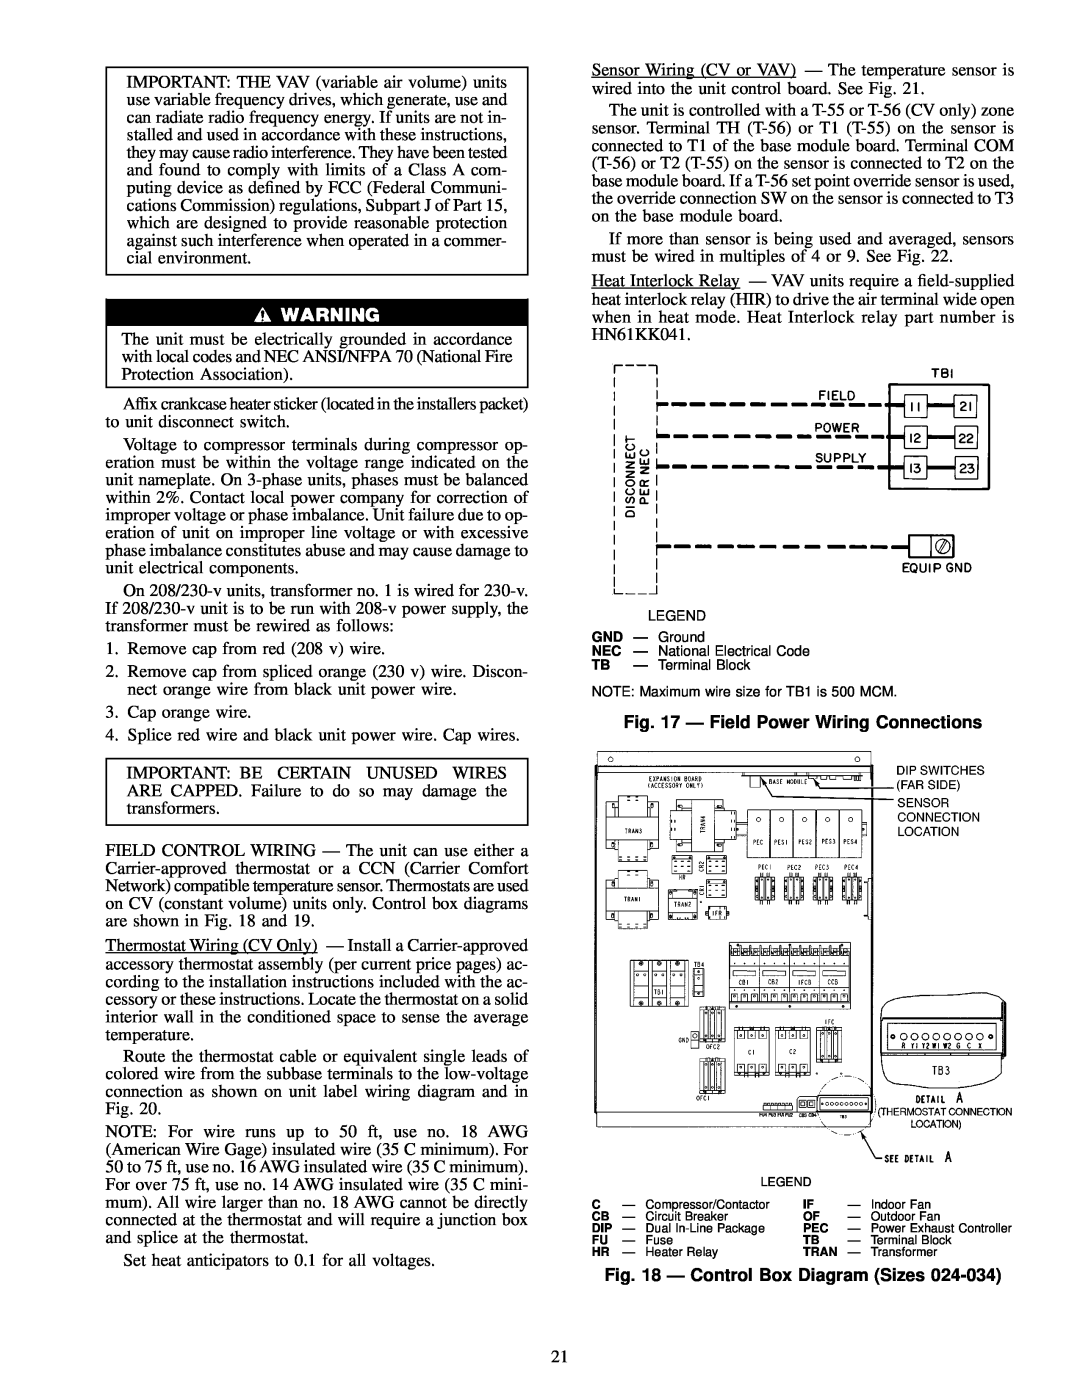 Carrier EW, 48EJ, EK, EY024-048 installation instructions Ð Field Power Wiring Connections, Ð Control Box Diagram Sizes 